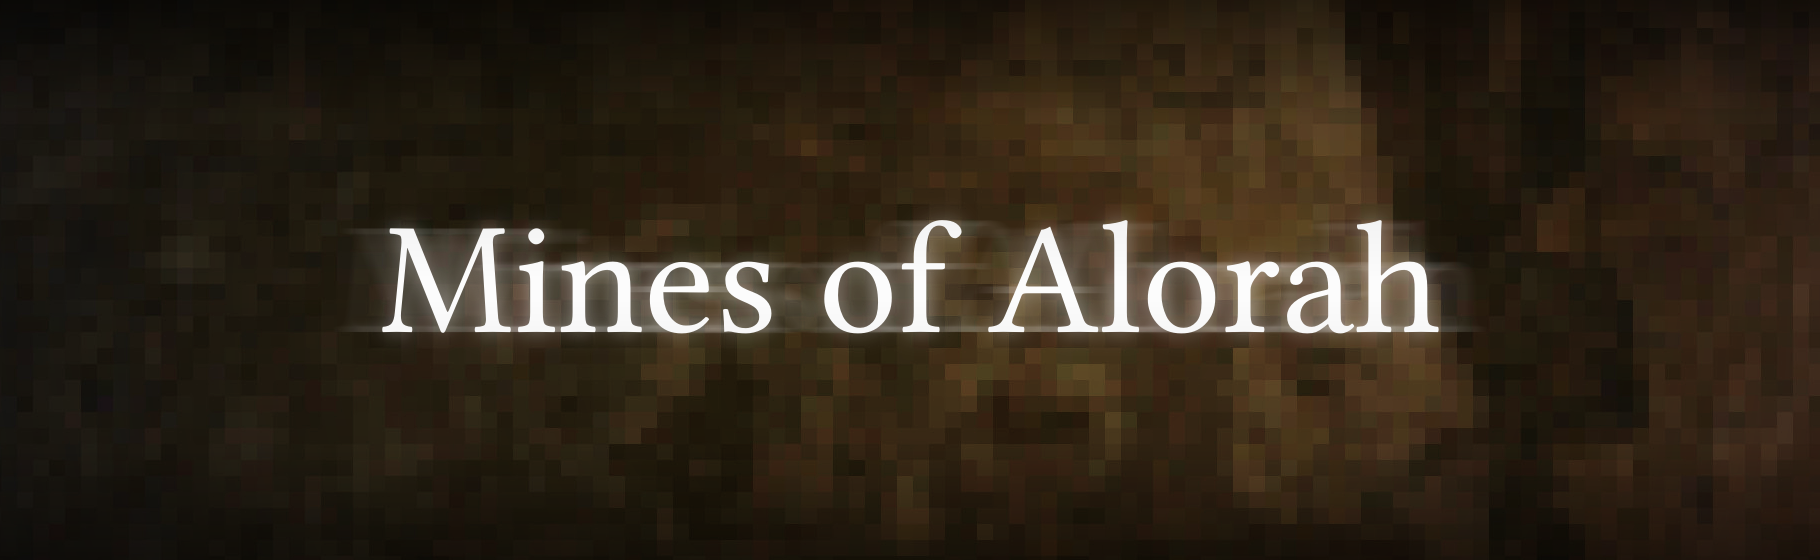 Mines of Alorah